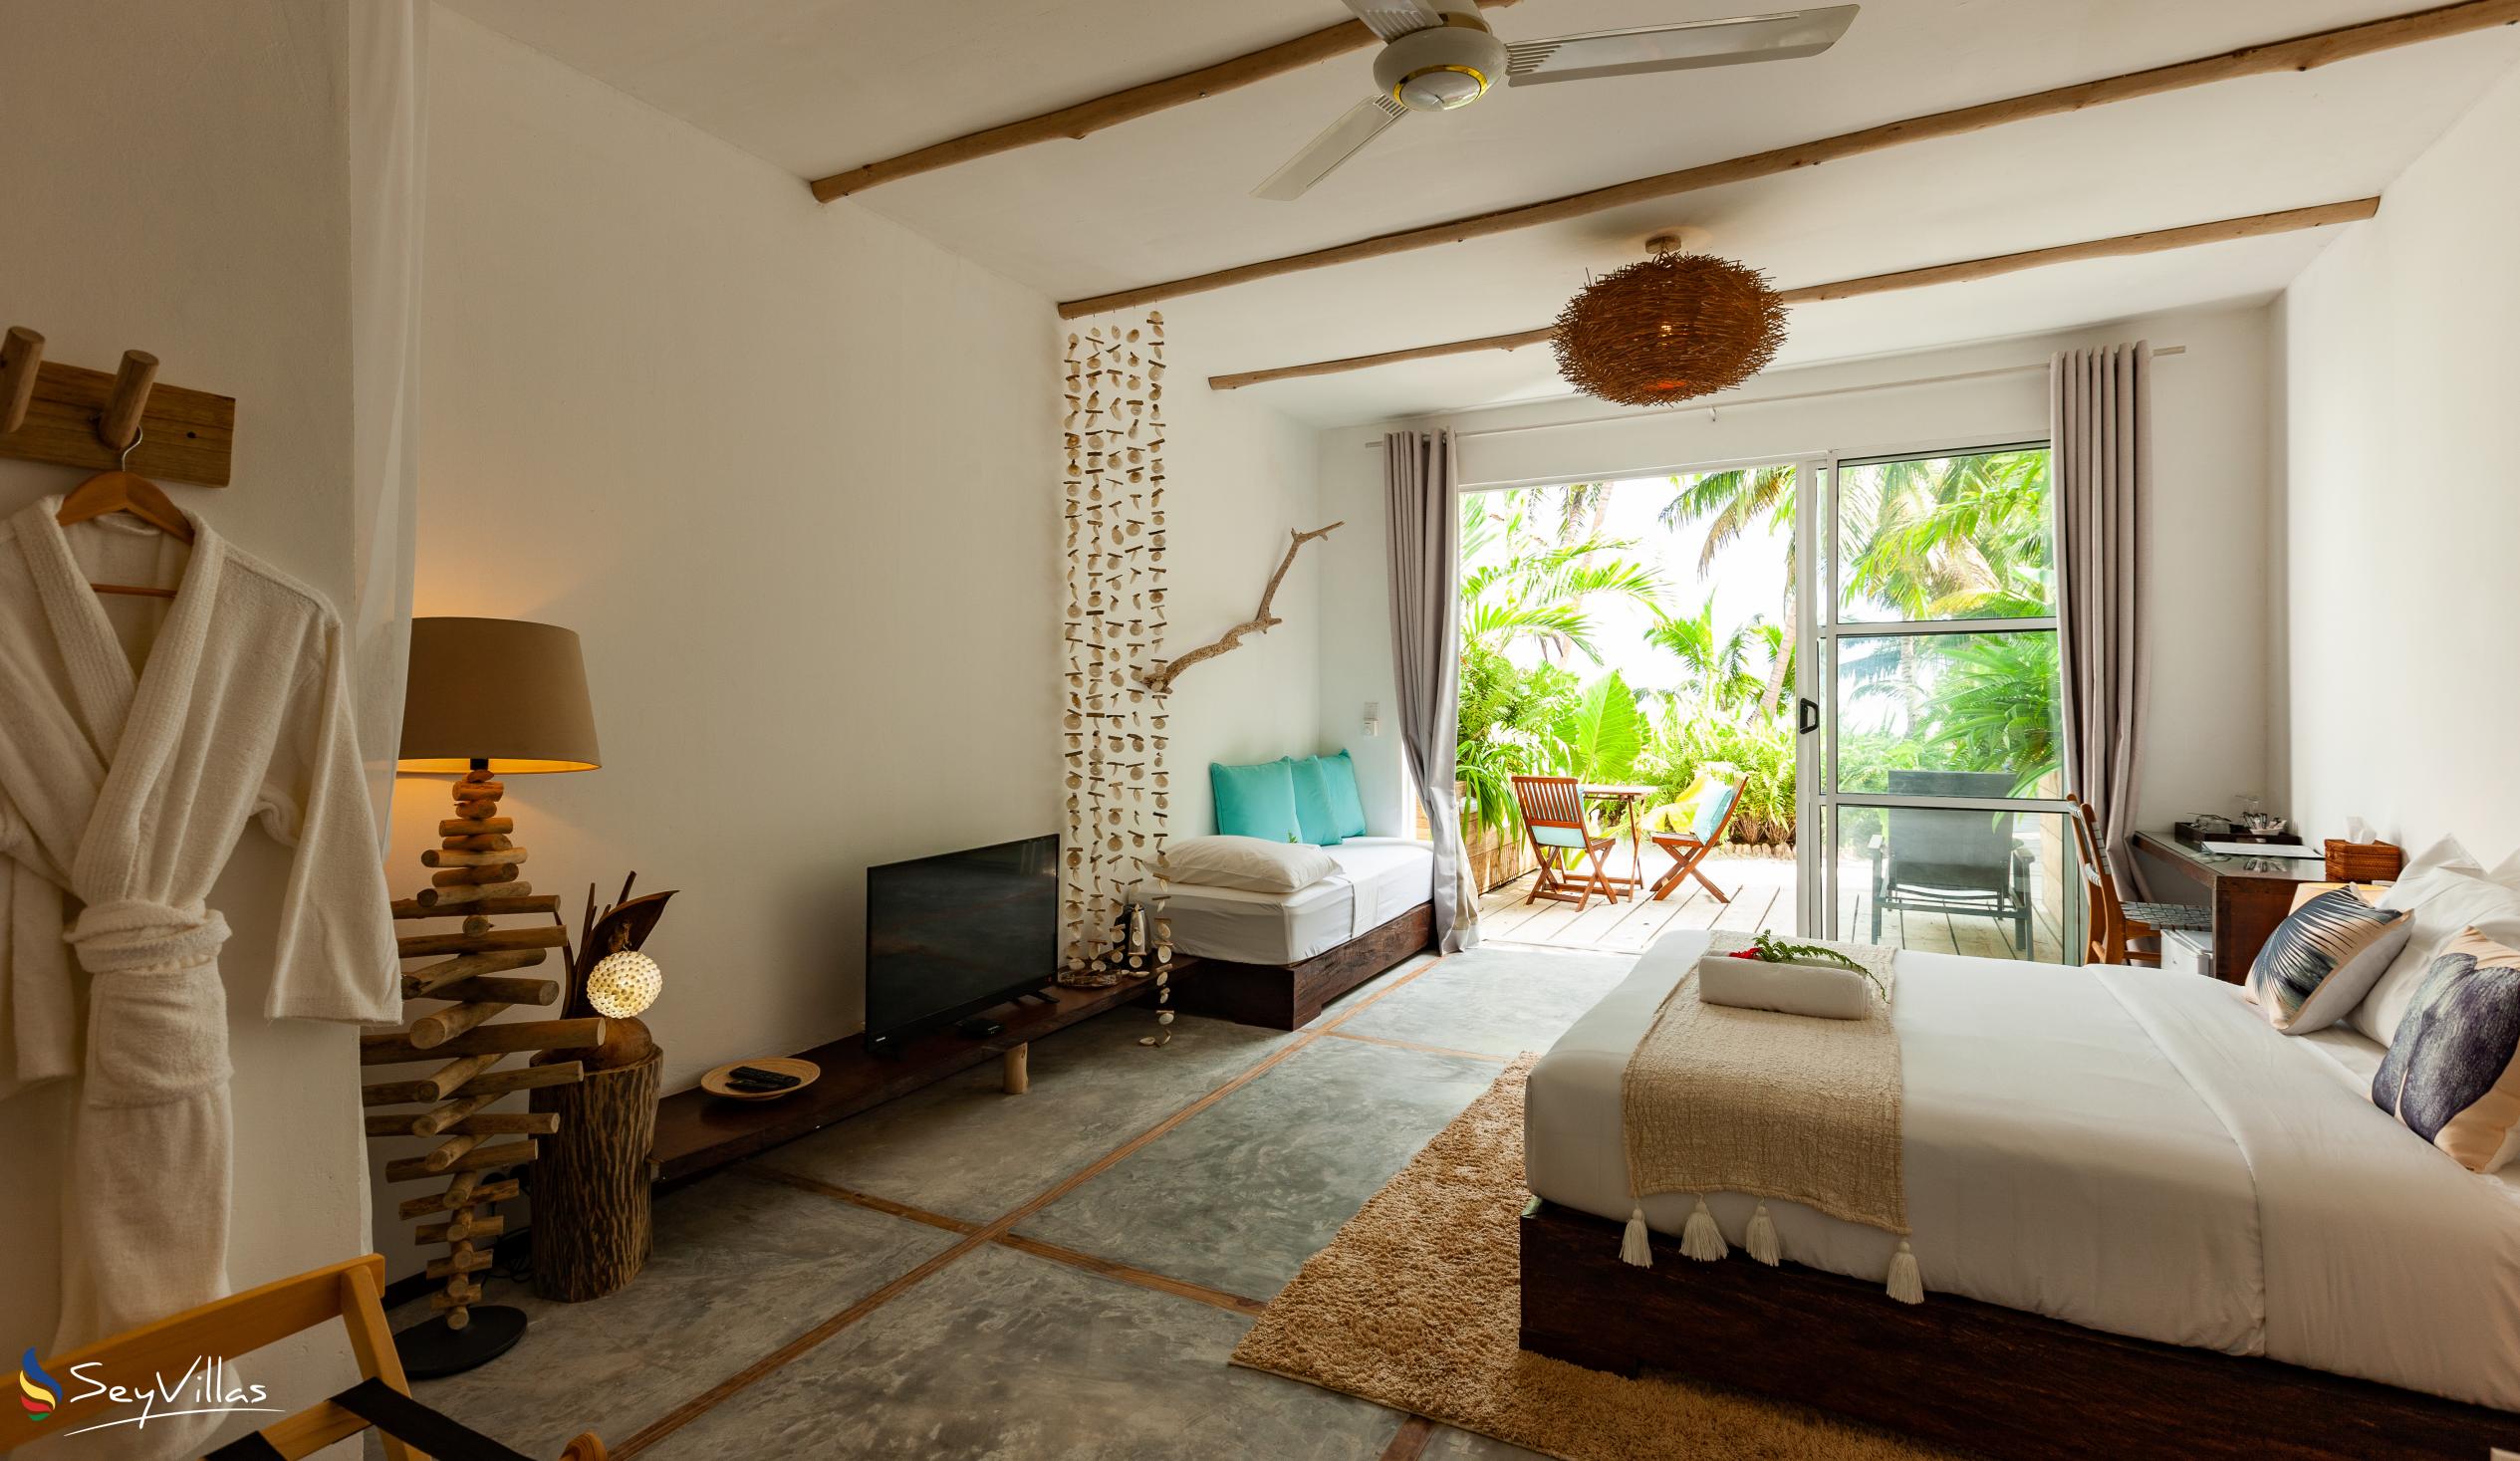 Photo 129: Bliss Hotel Praslin - Beach House - Beach Superior Room - Praslin (Seychelles)